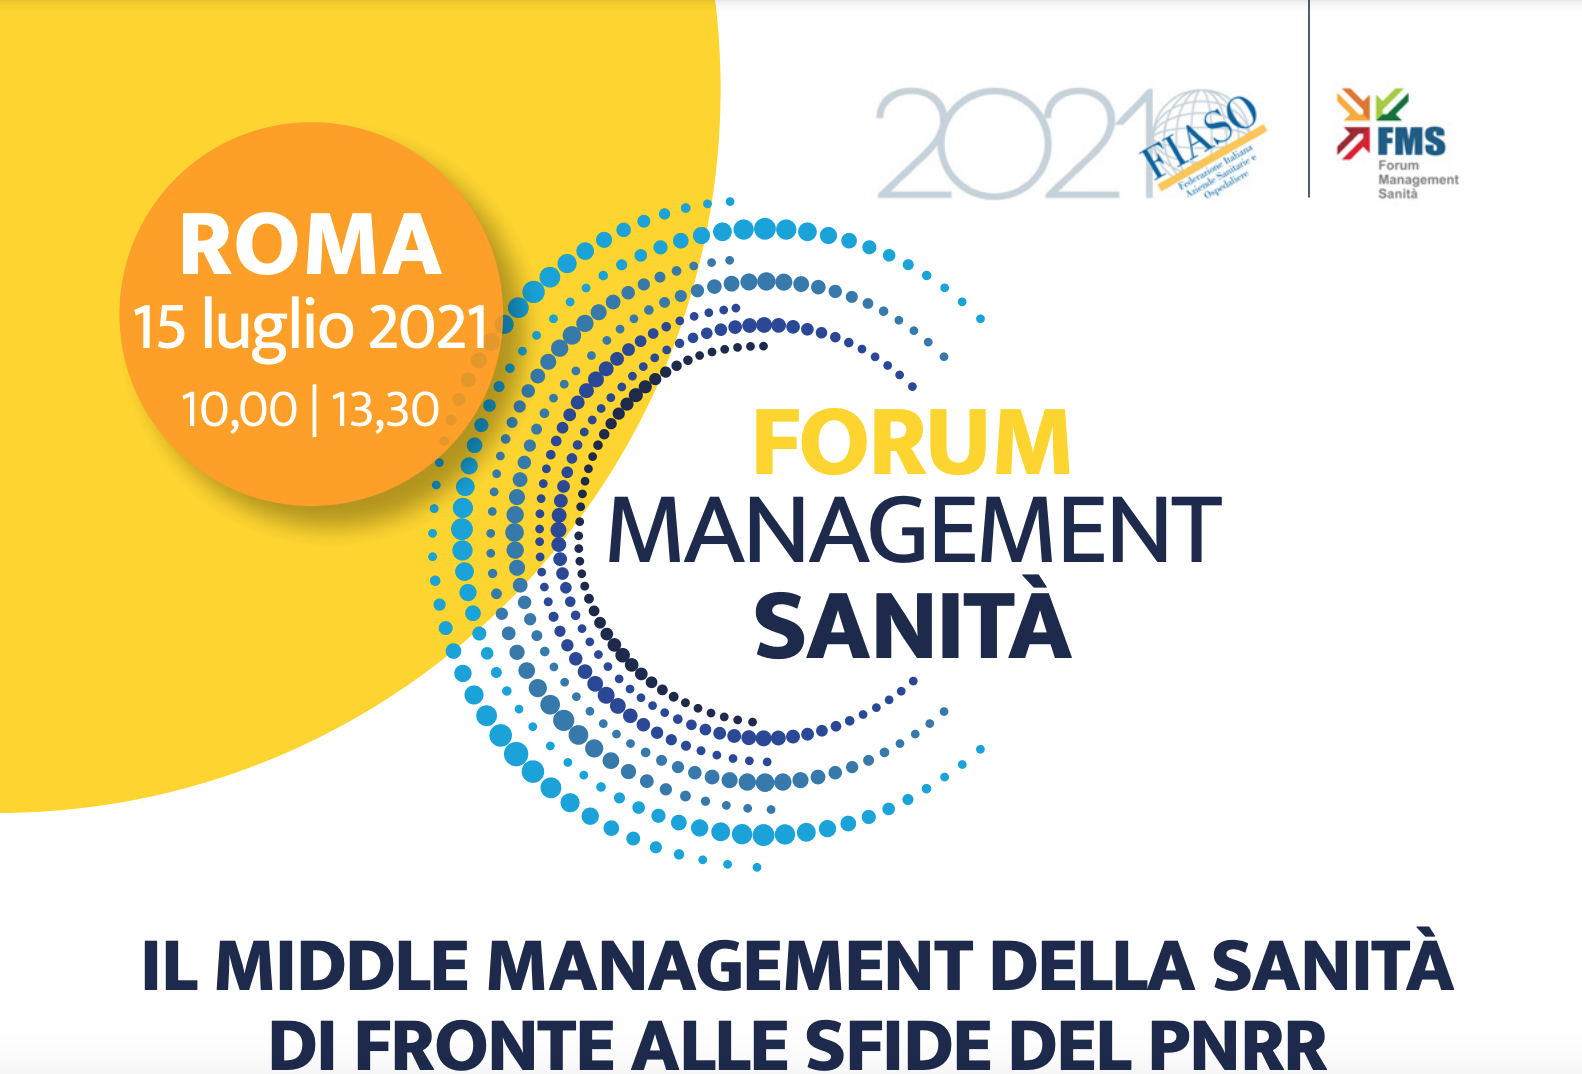 Forum Management in Sanità